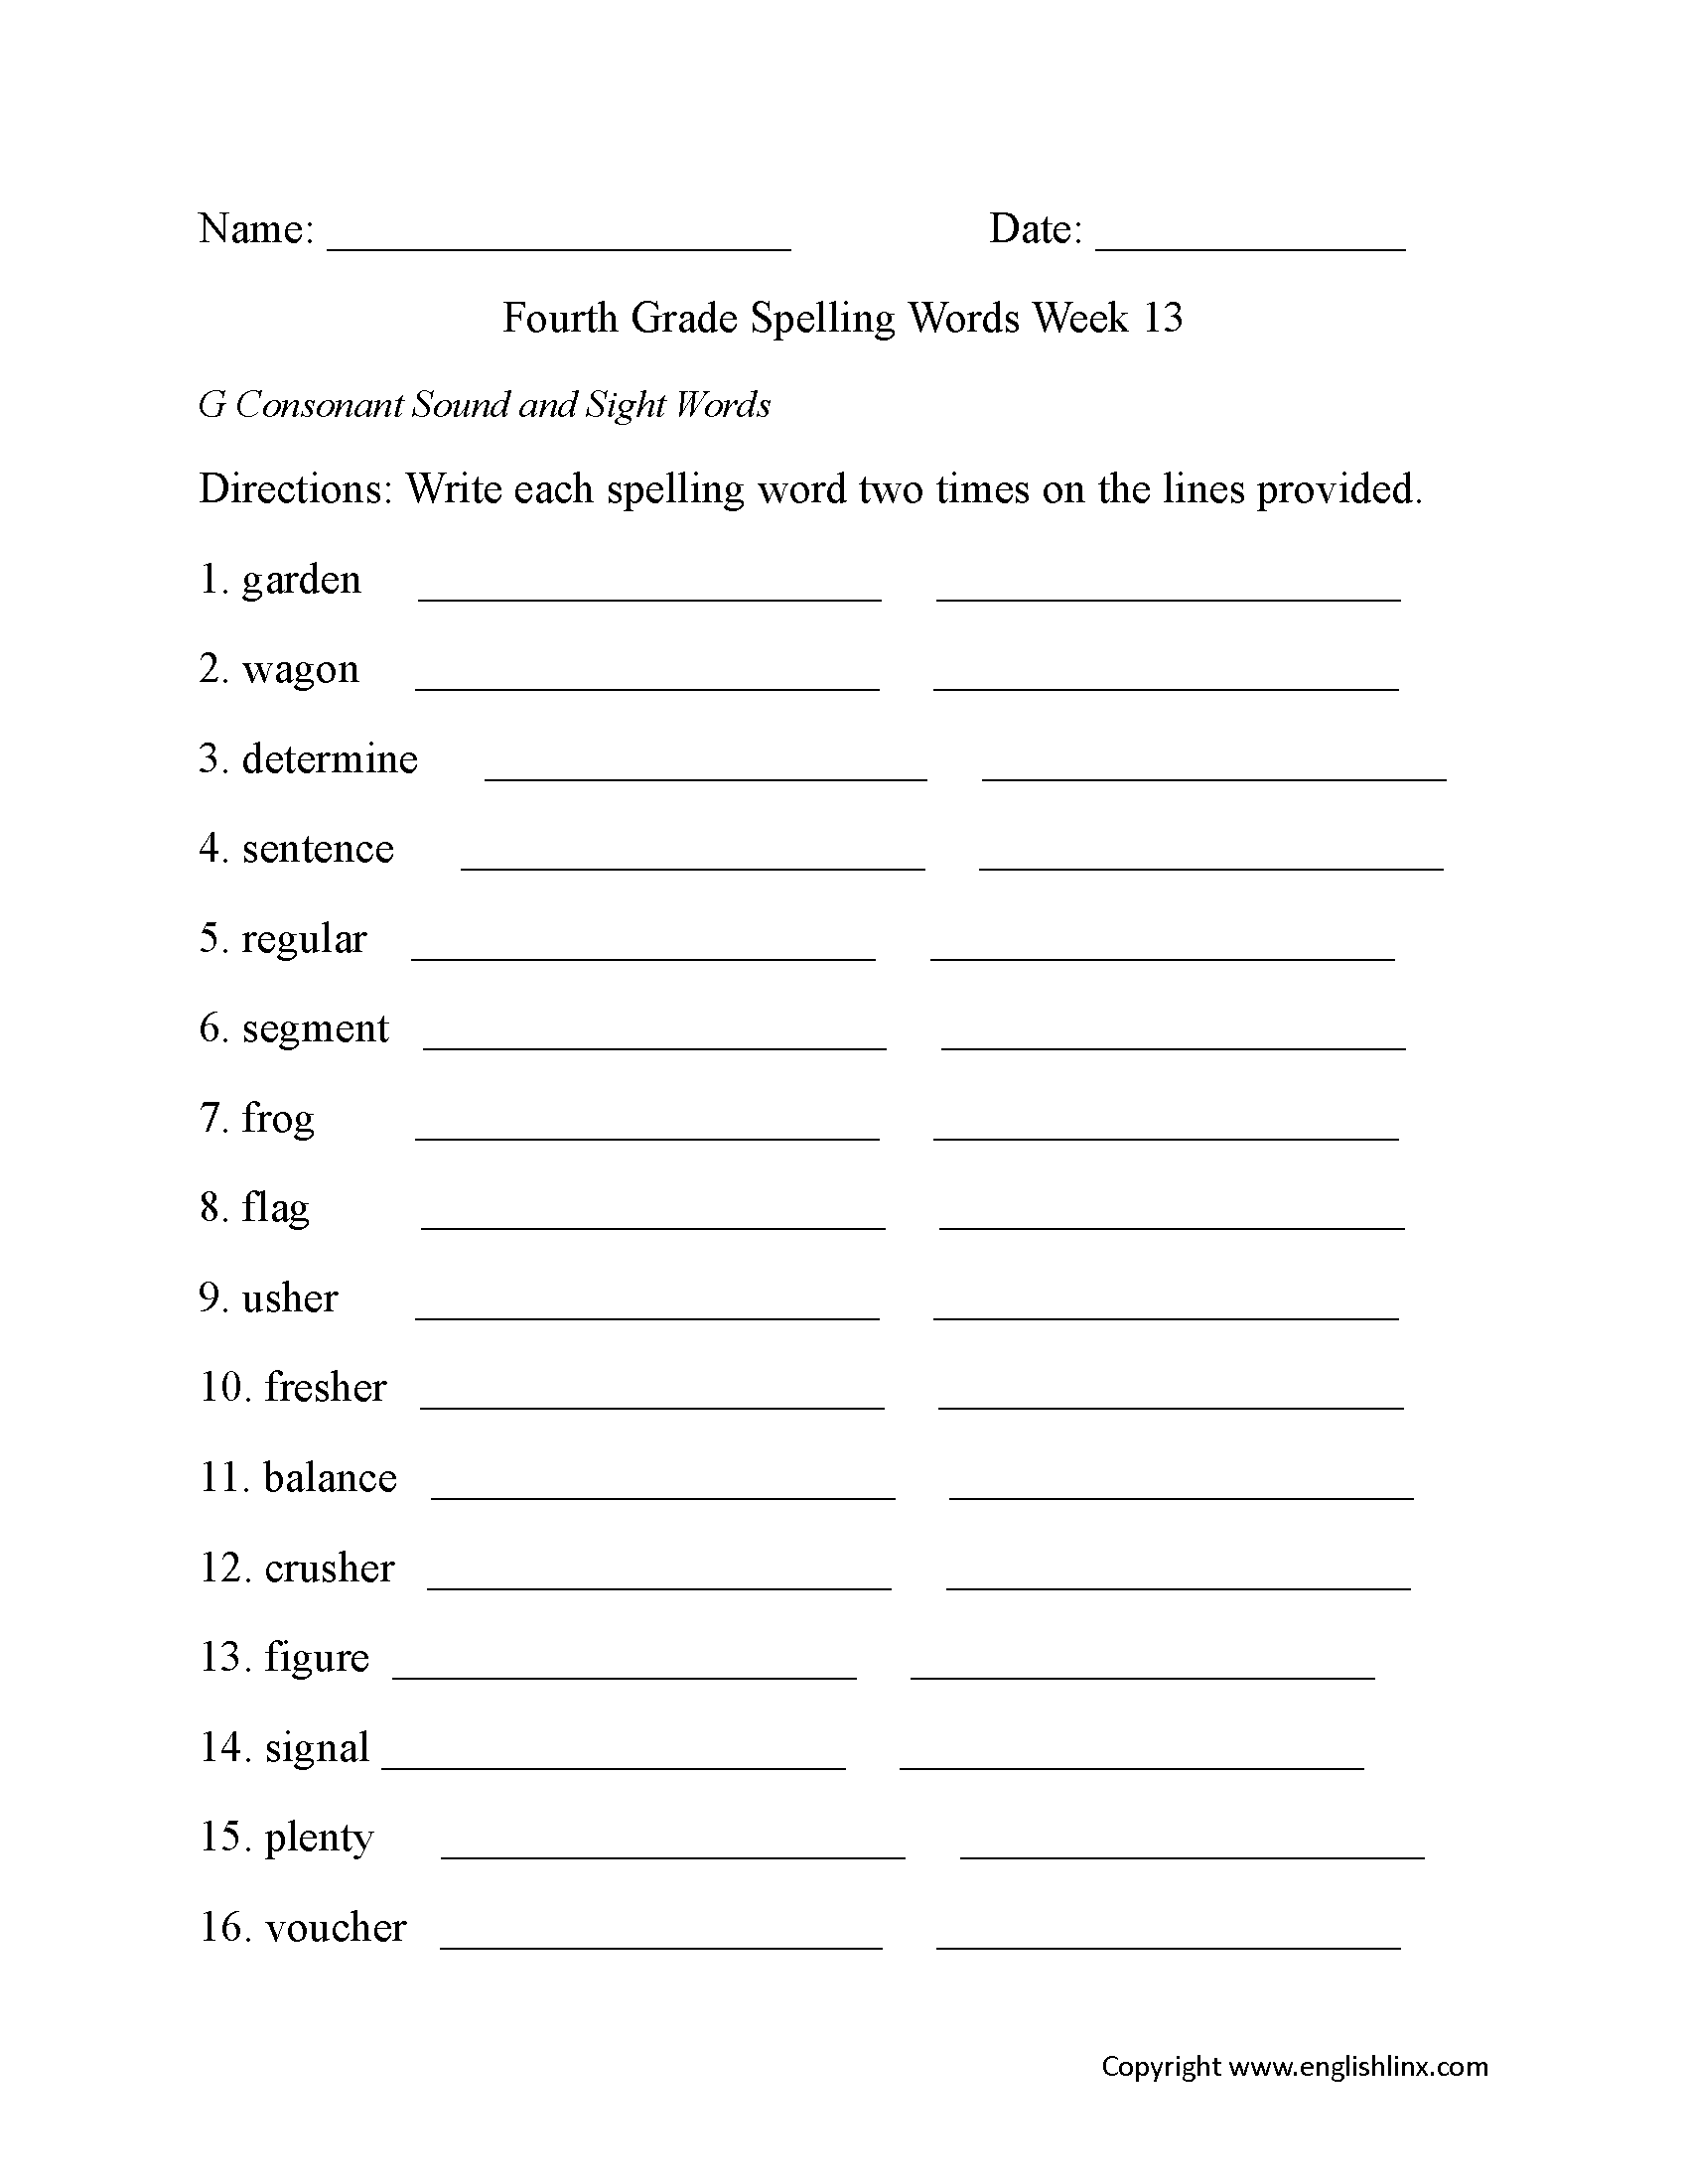 Fourth Grade Spelling Worksheets